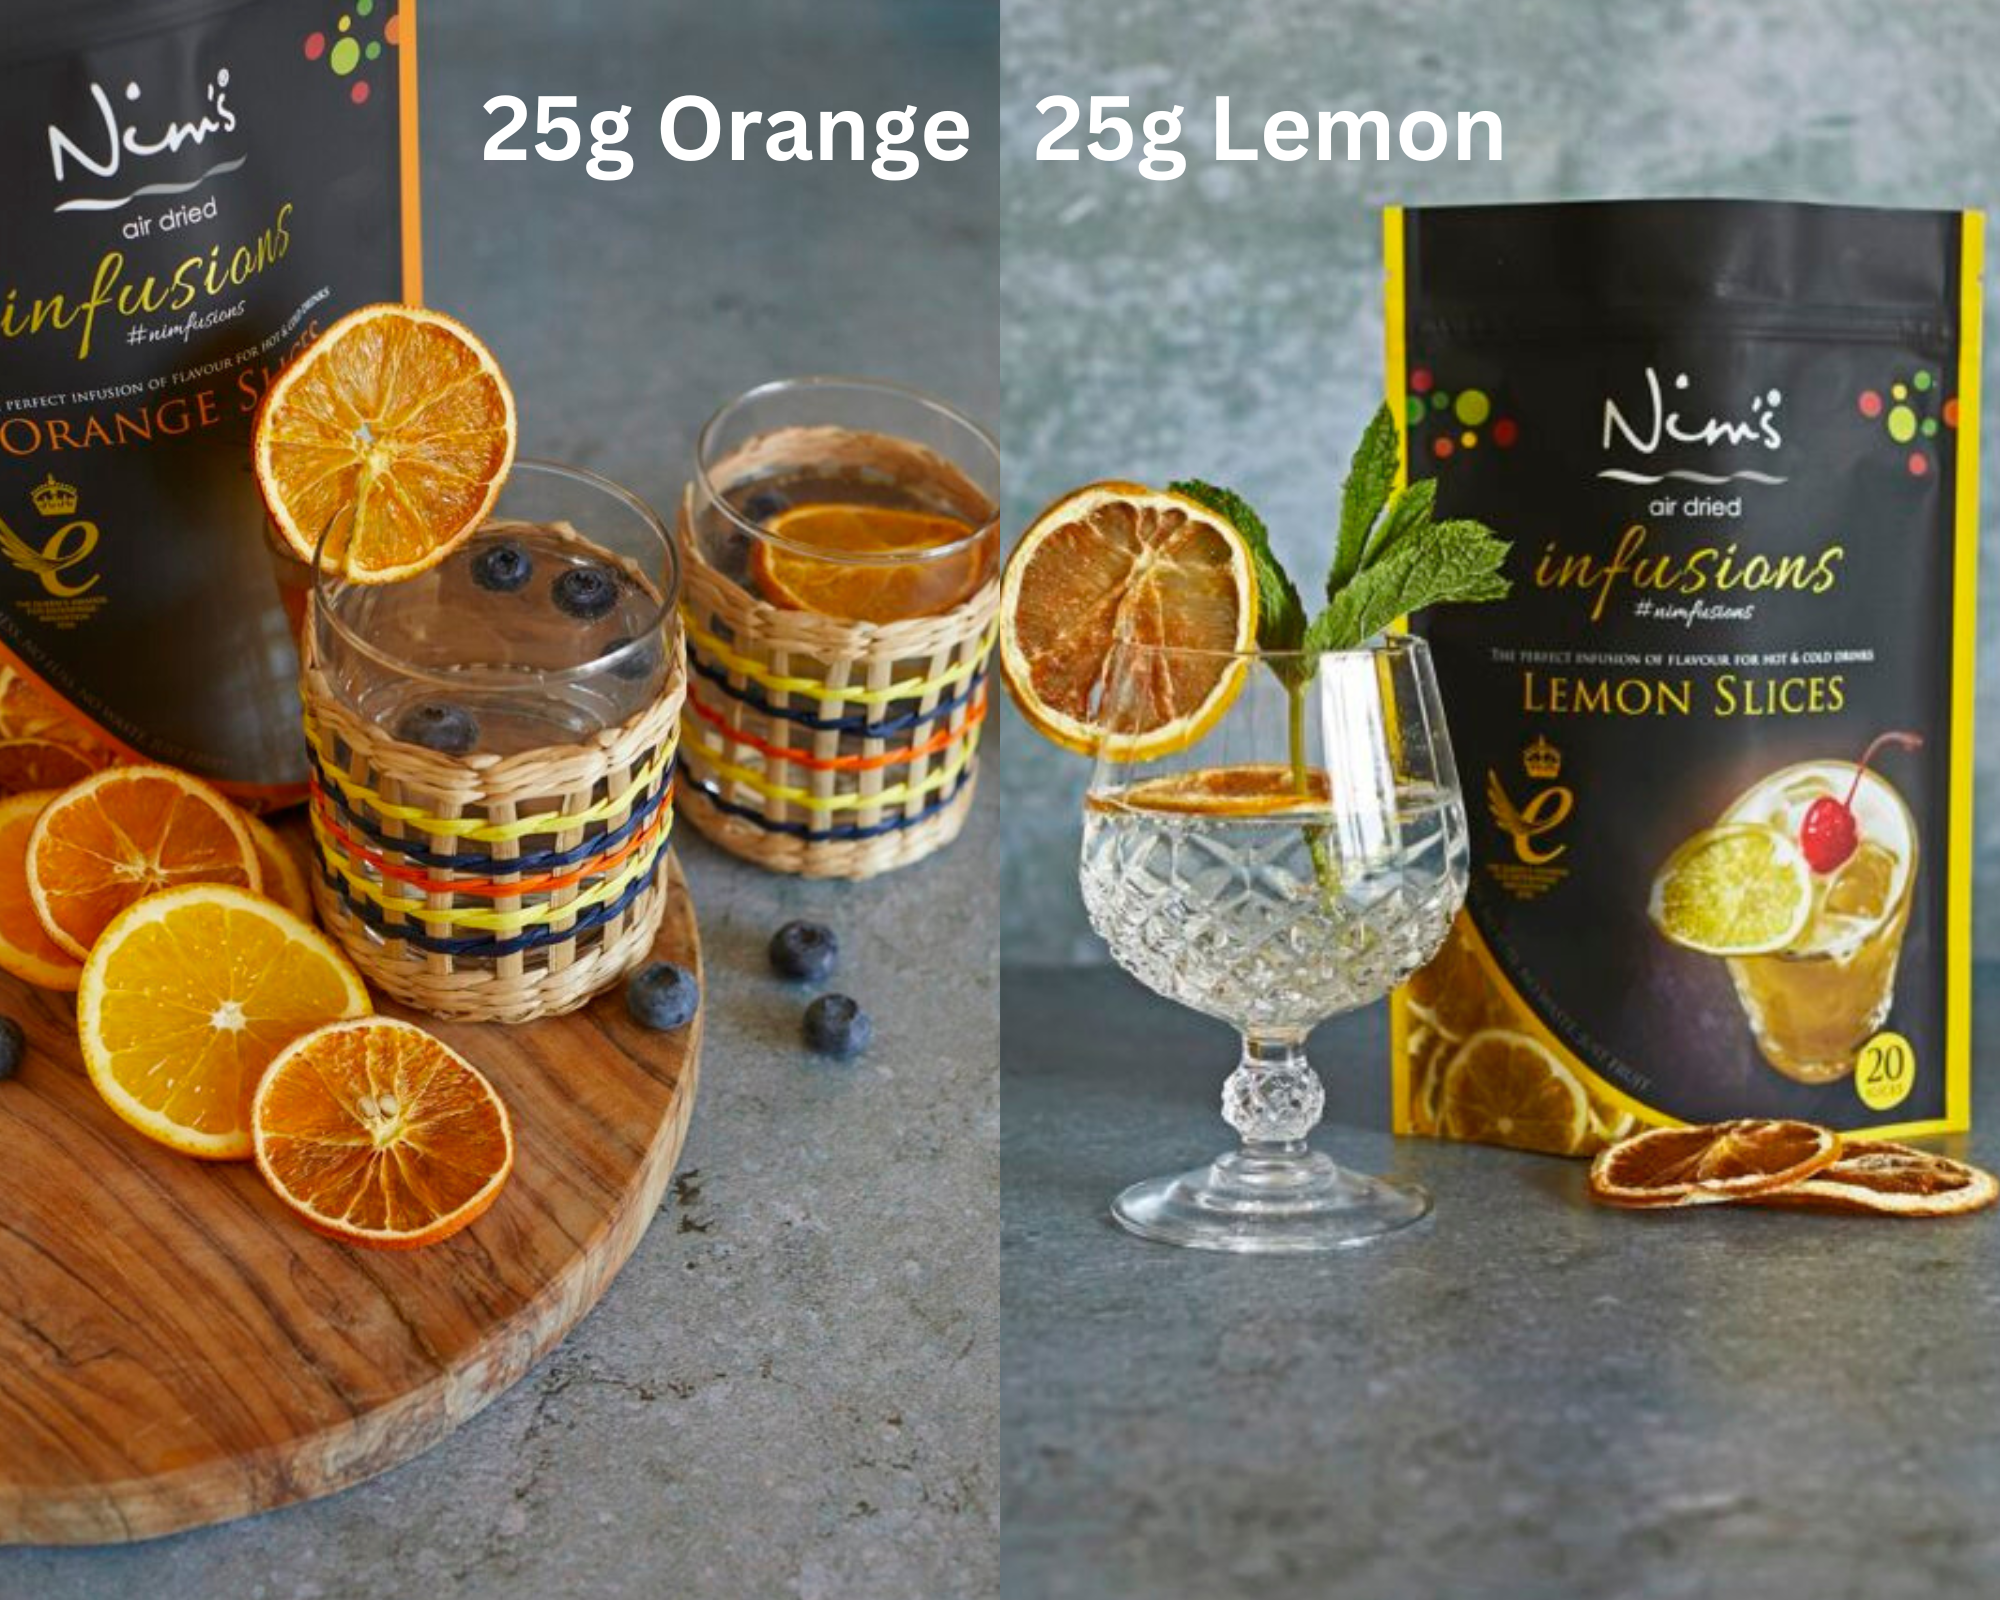 Nim’s Air dried Mix of Orange and Lemon Slices 50g (25g each)